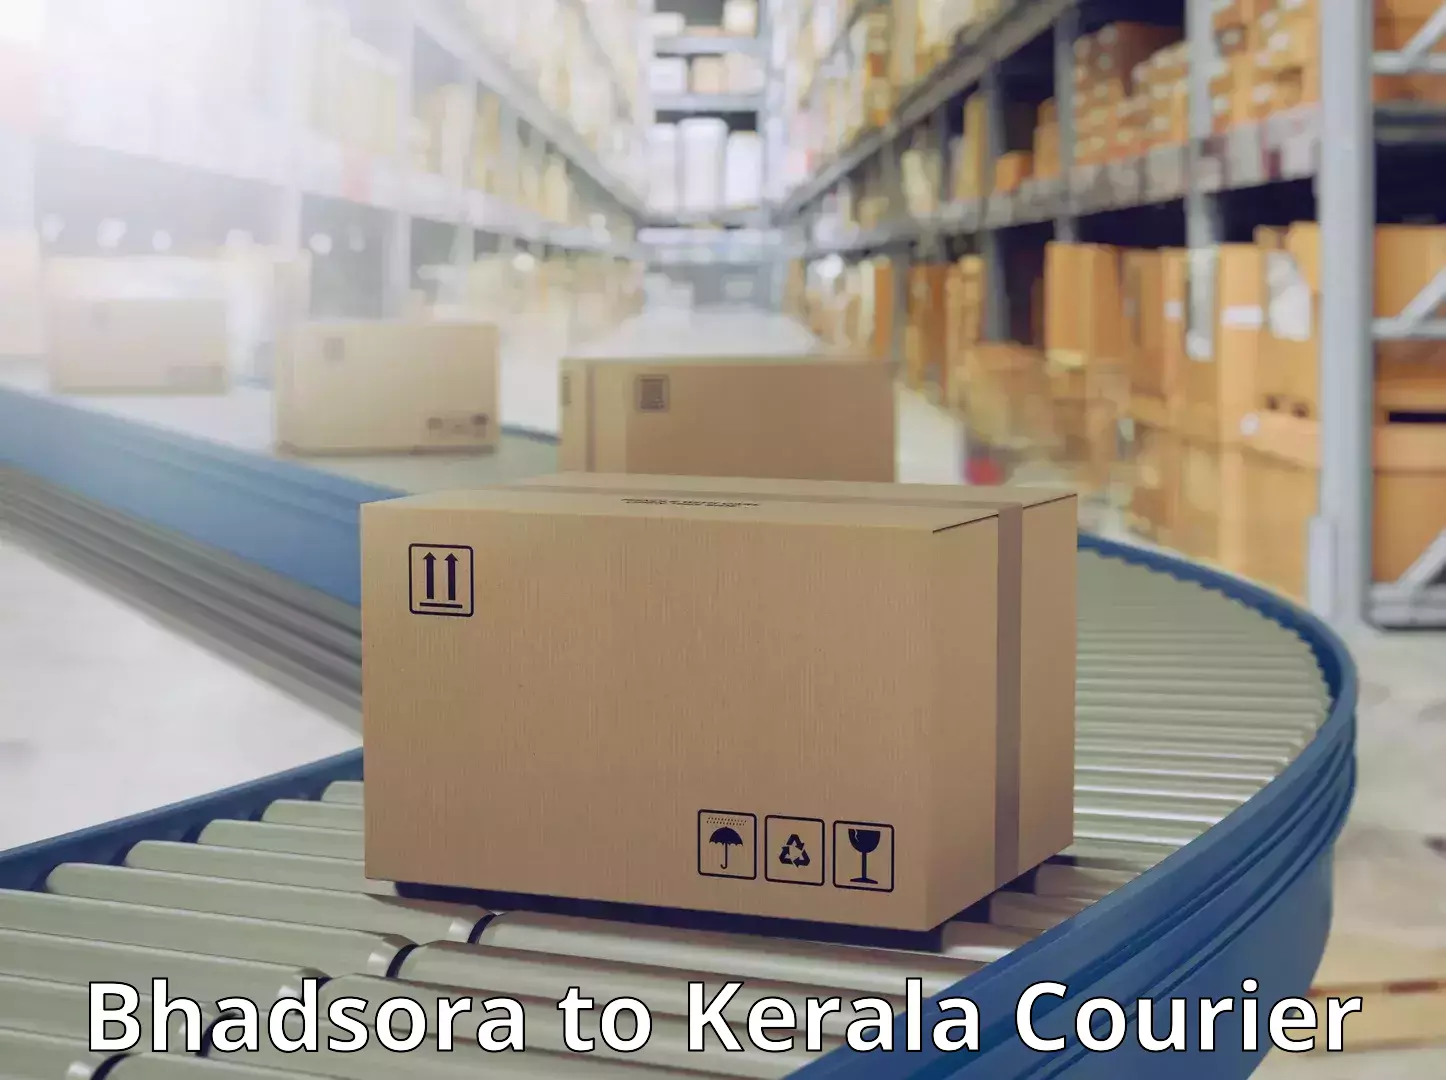 Express logistics providers Bhadsora to Nochad